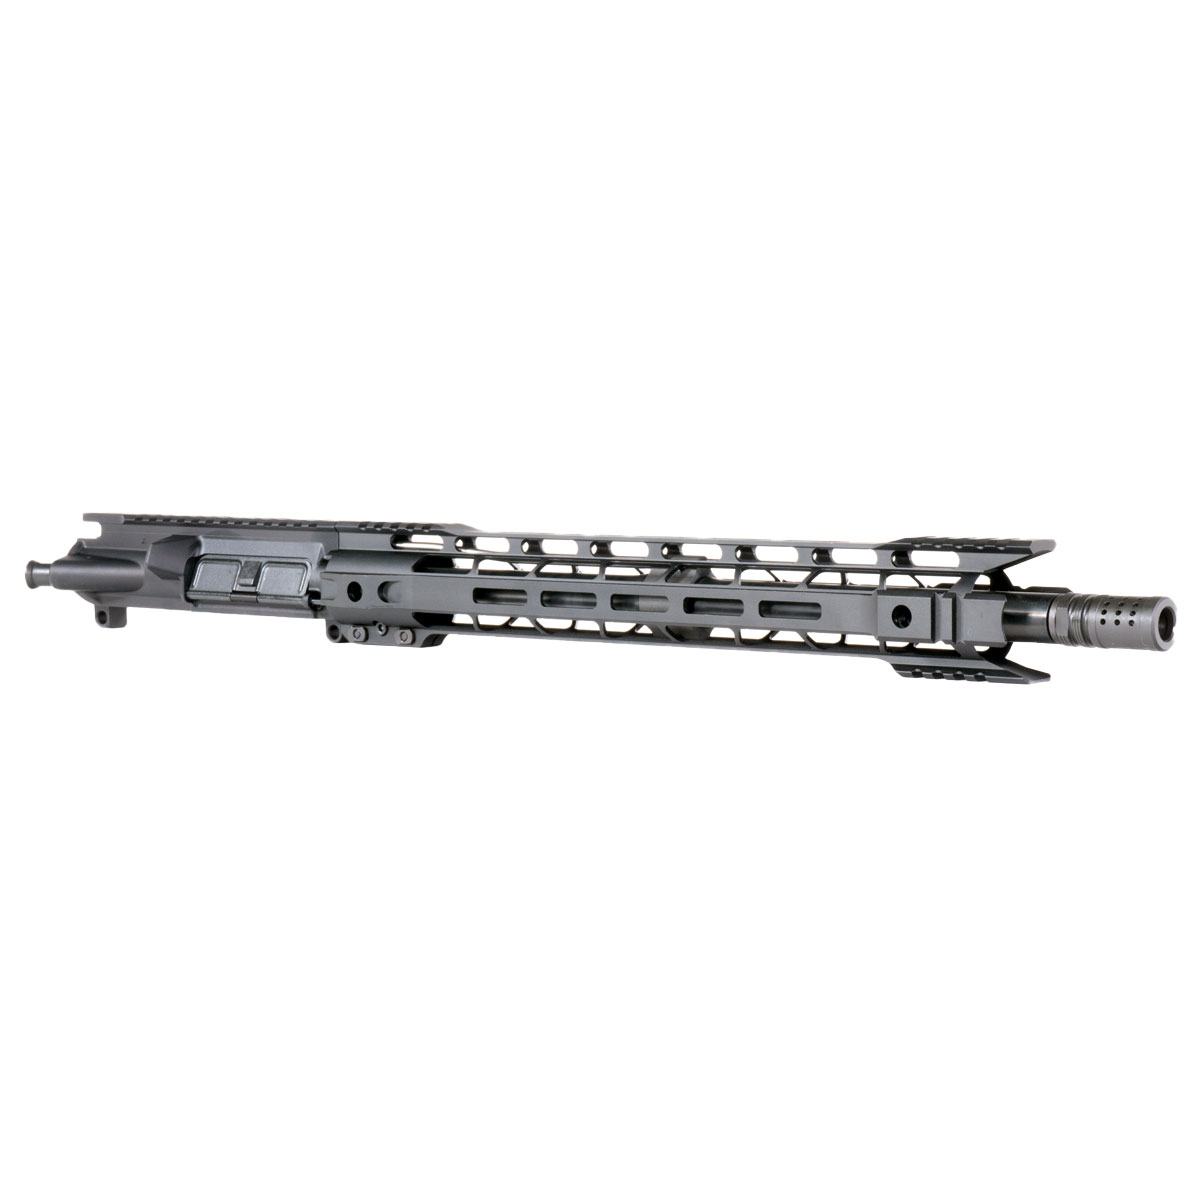 OTD 'Quantumstrike' 16-inch AR-15 .458 SOCOM Nitride Rifle Upper Build Kit